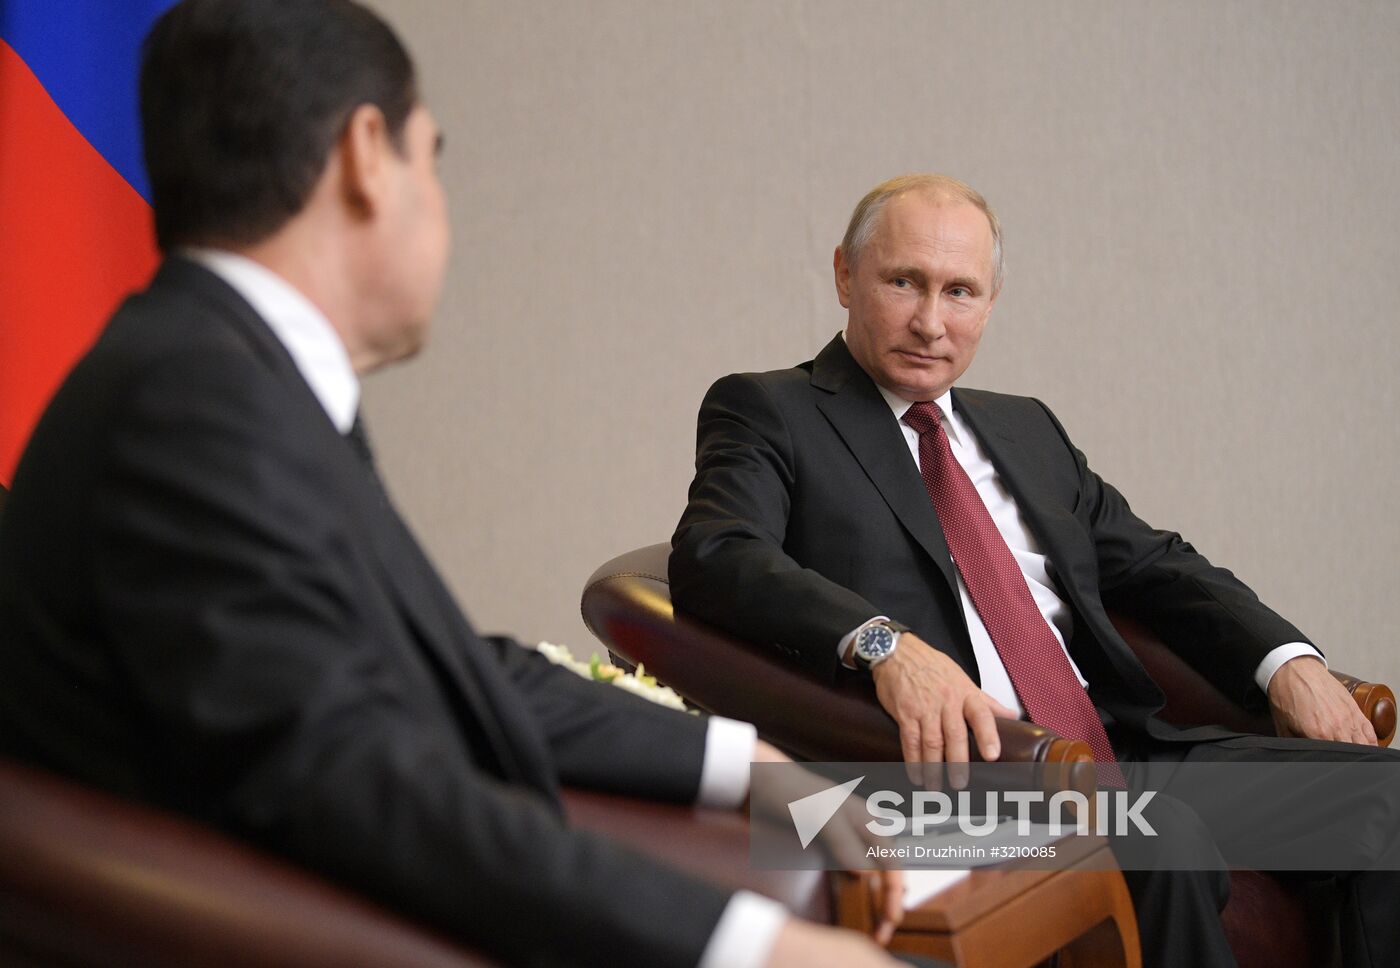 President Vladimir Putin meets with President of Turkmenistan Gurbanguly Berdimuhamedow